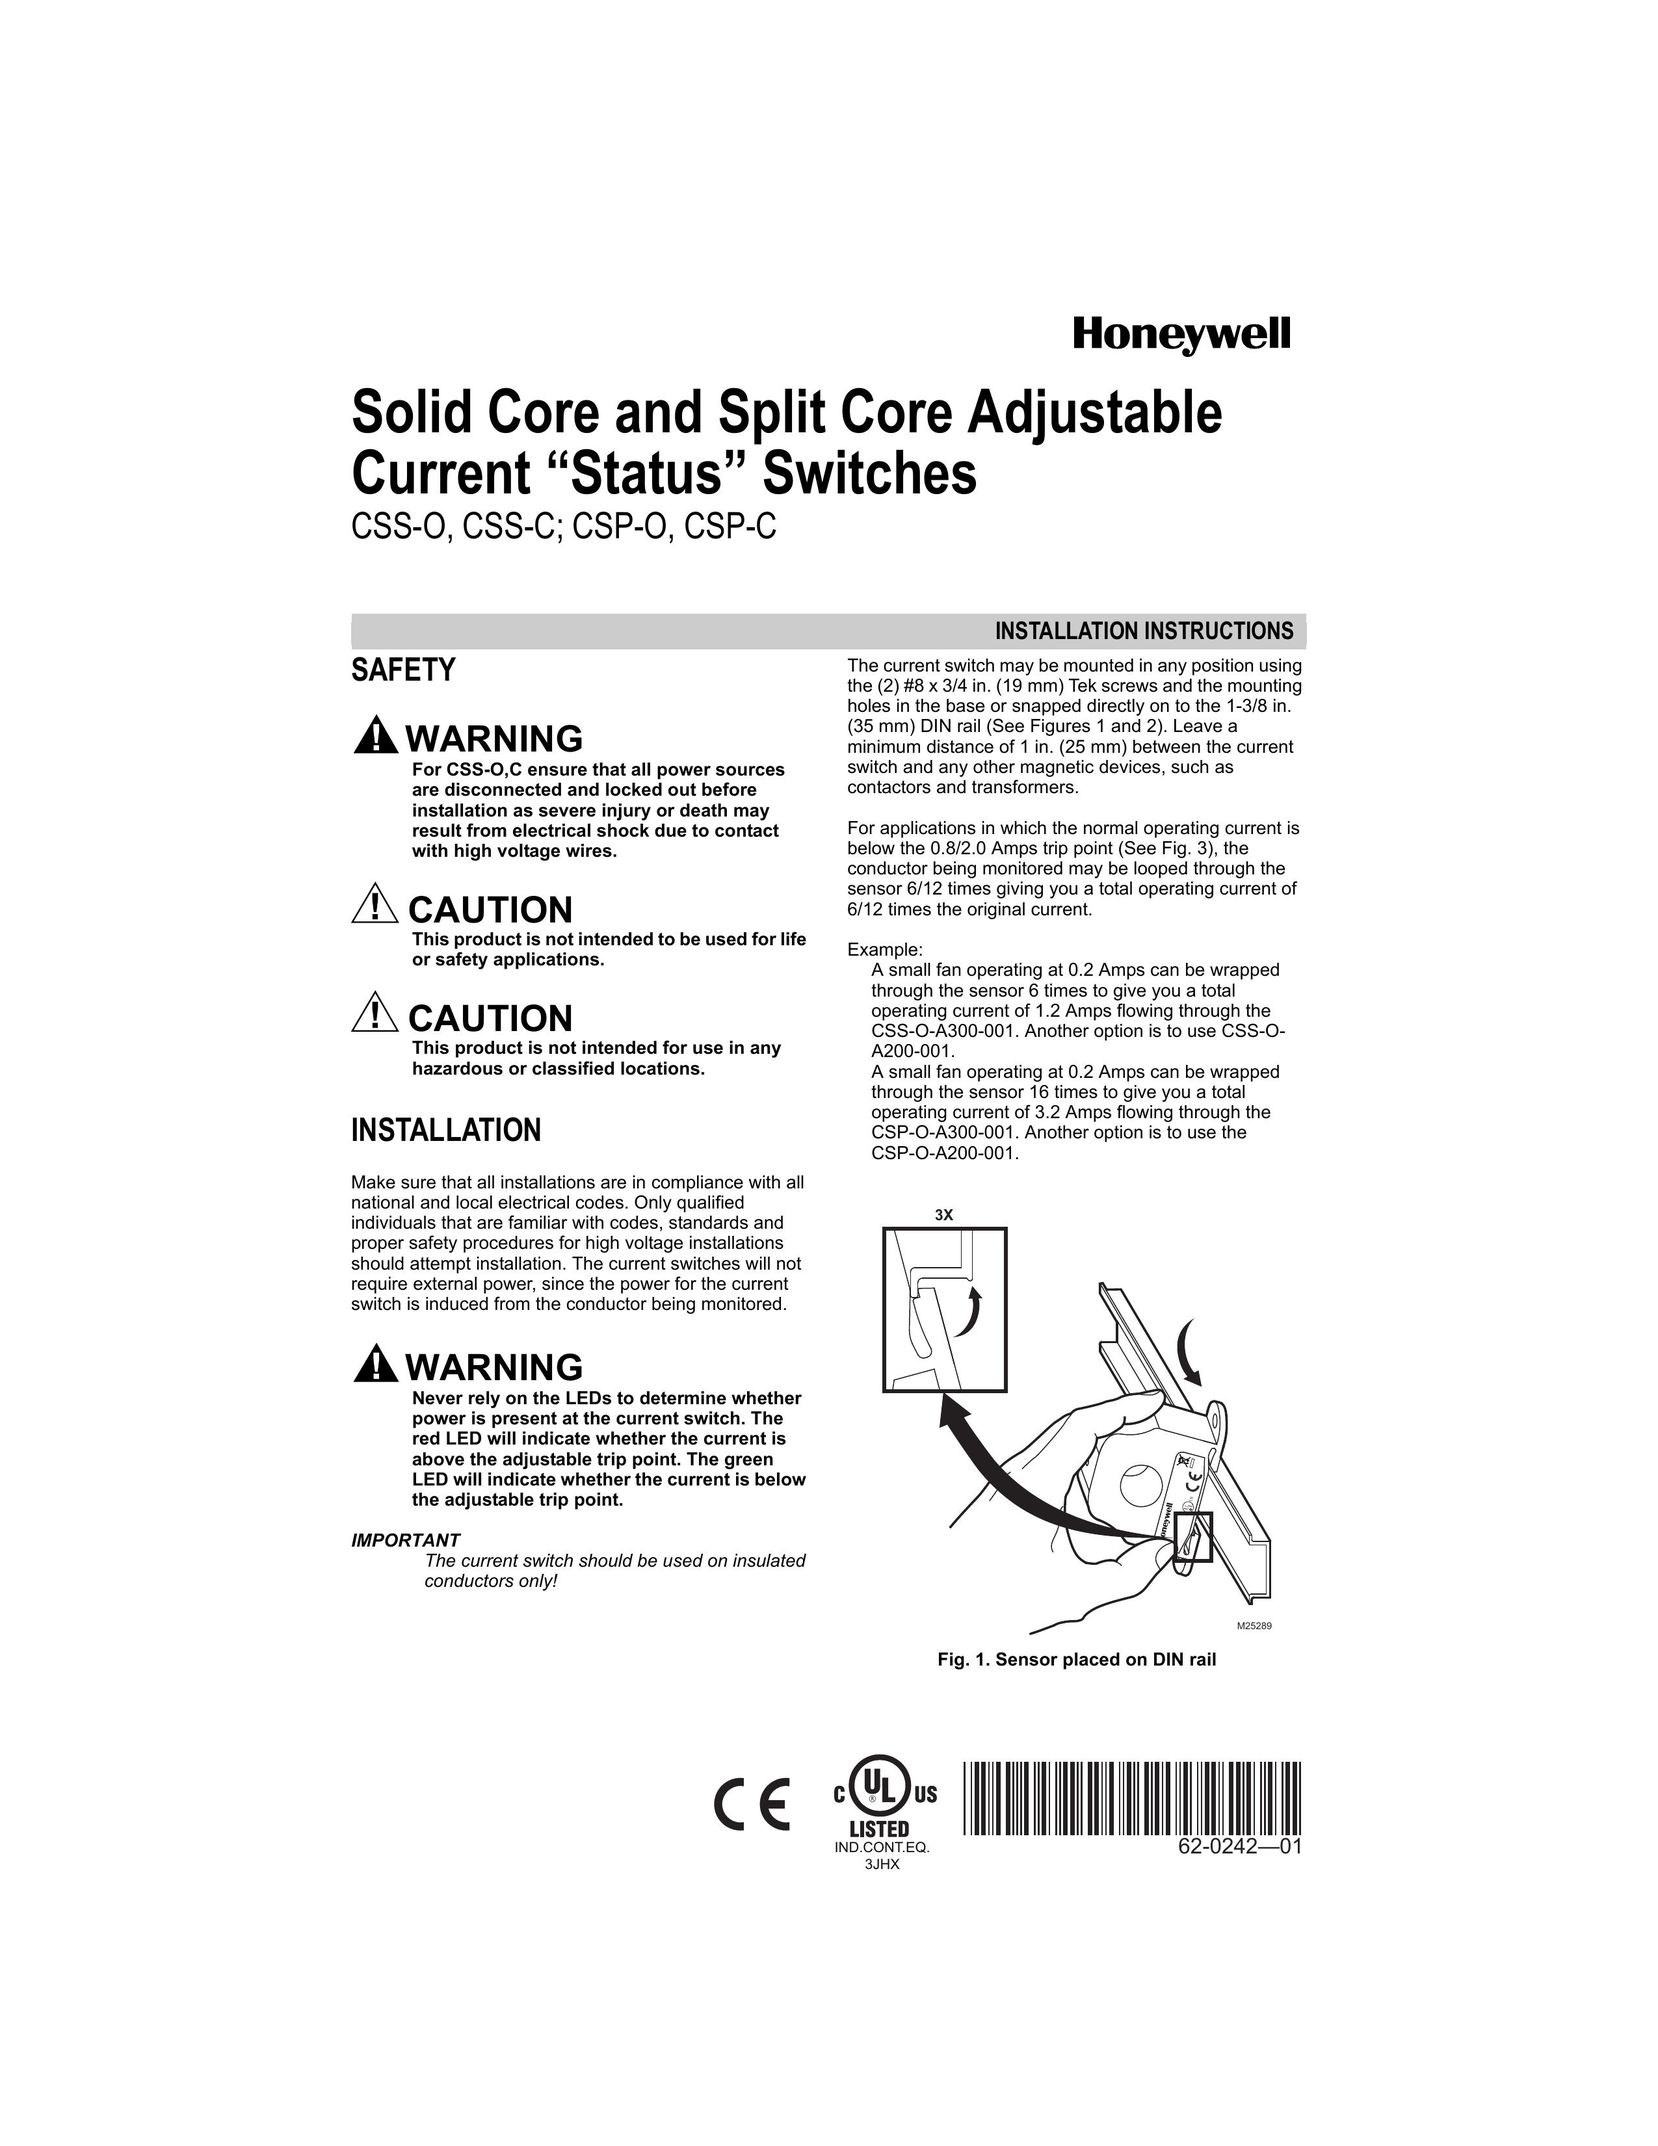 Honeywell CSP-C Switch User Manual